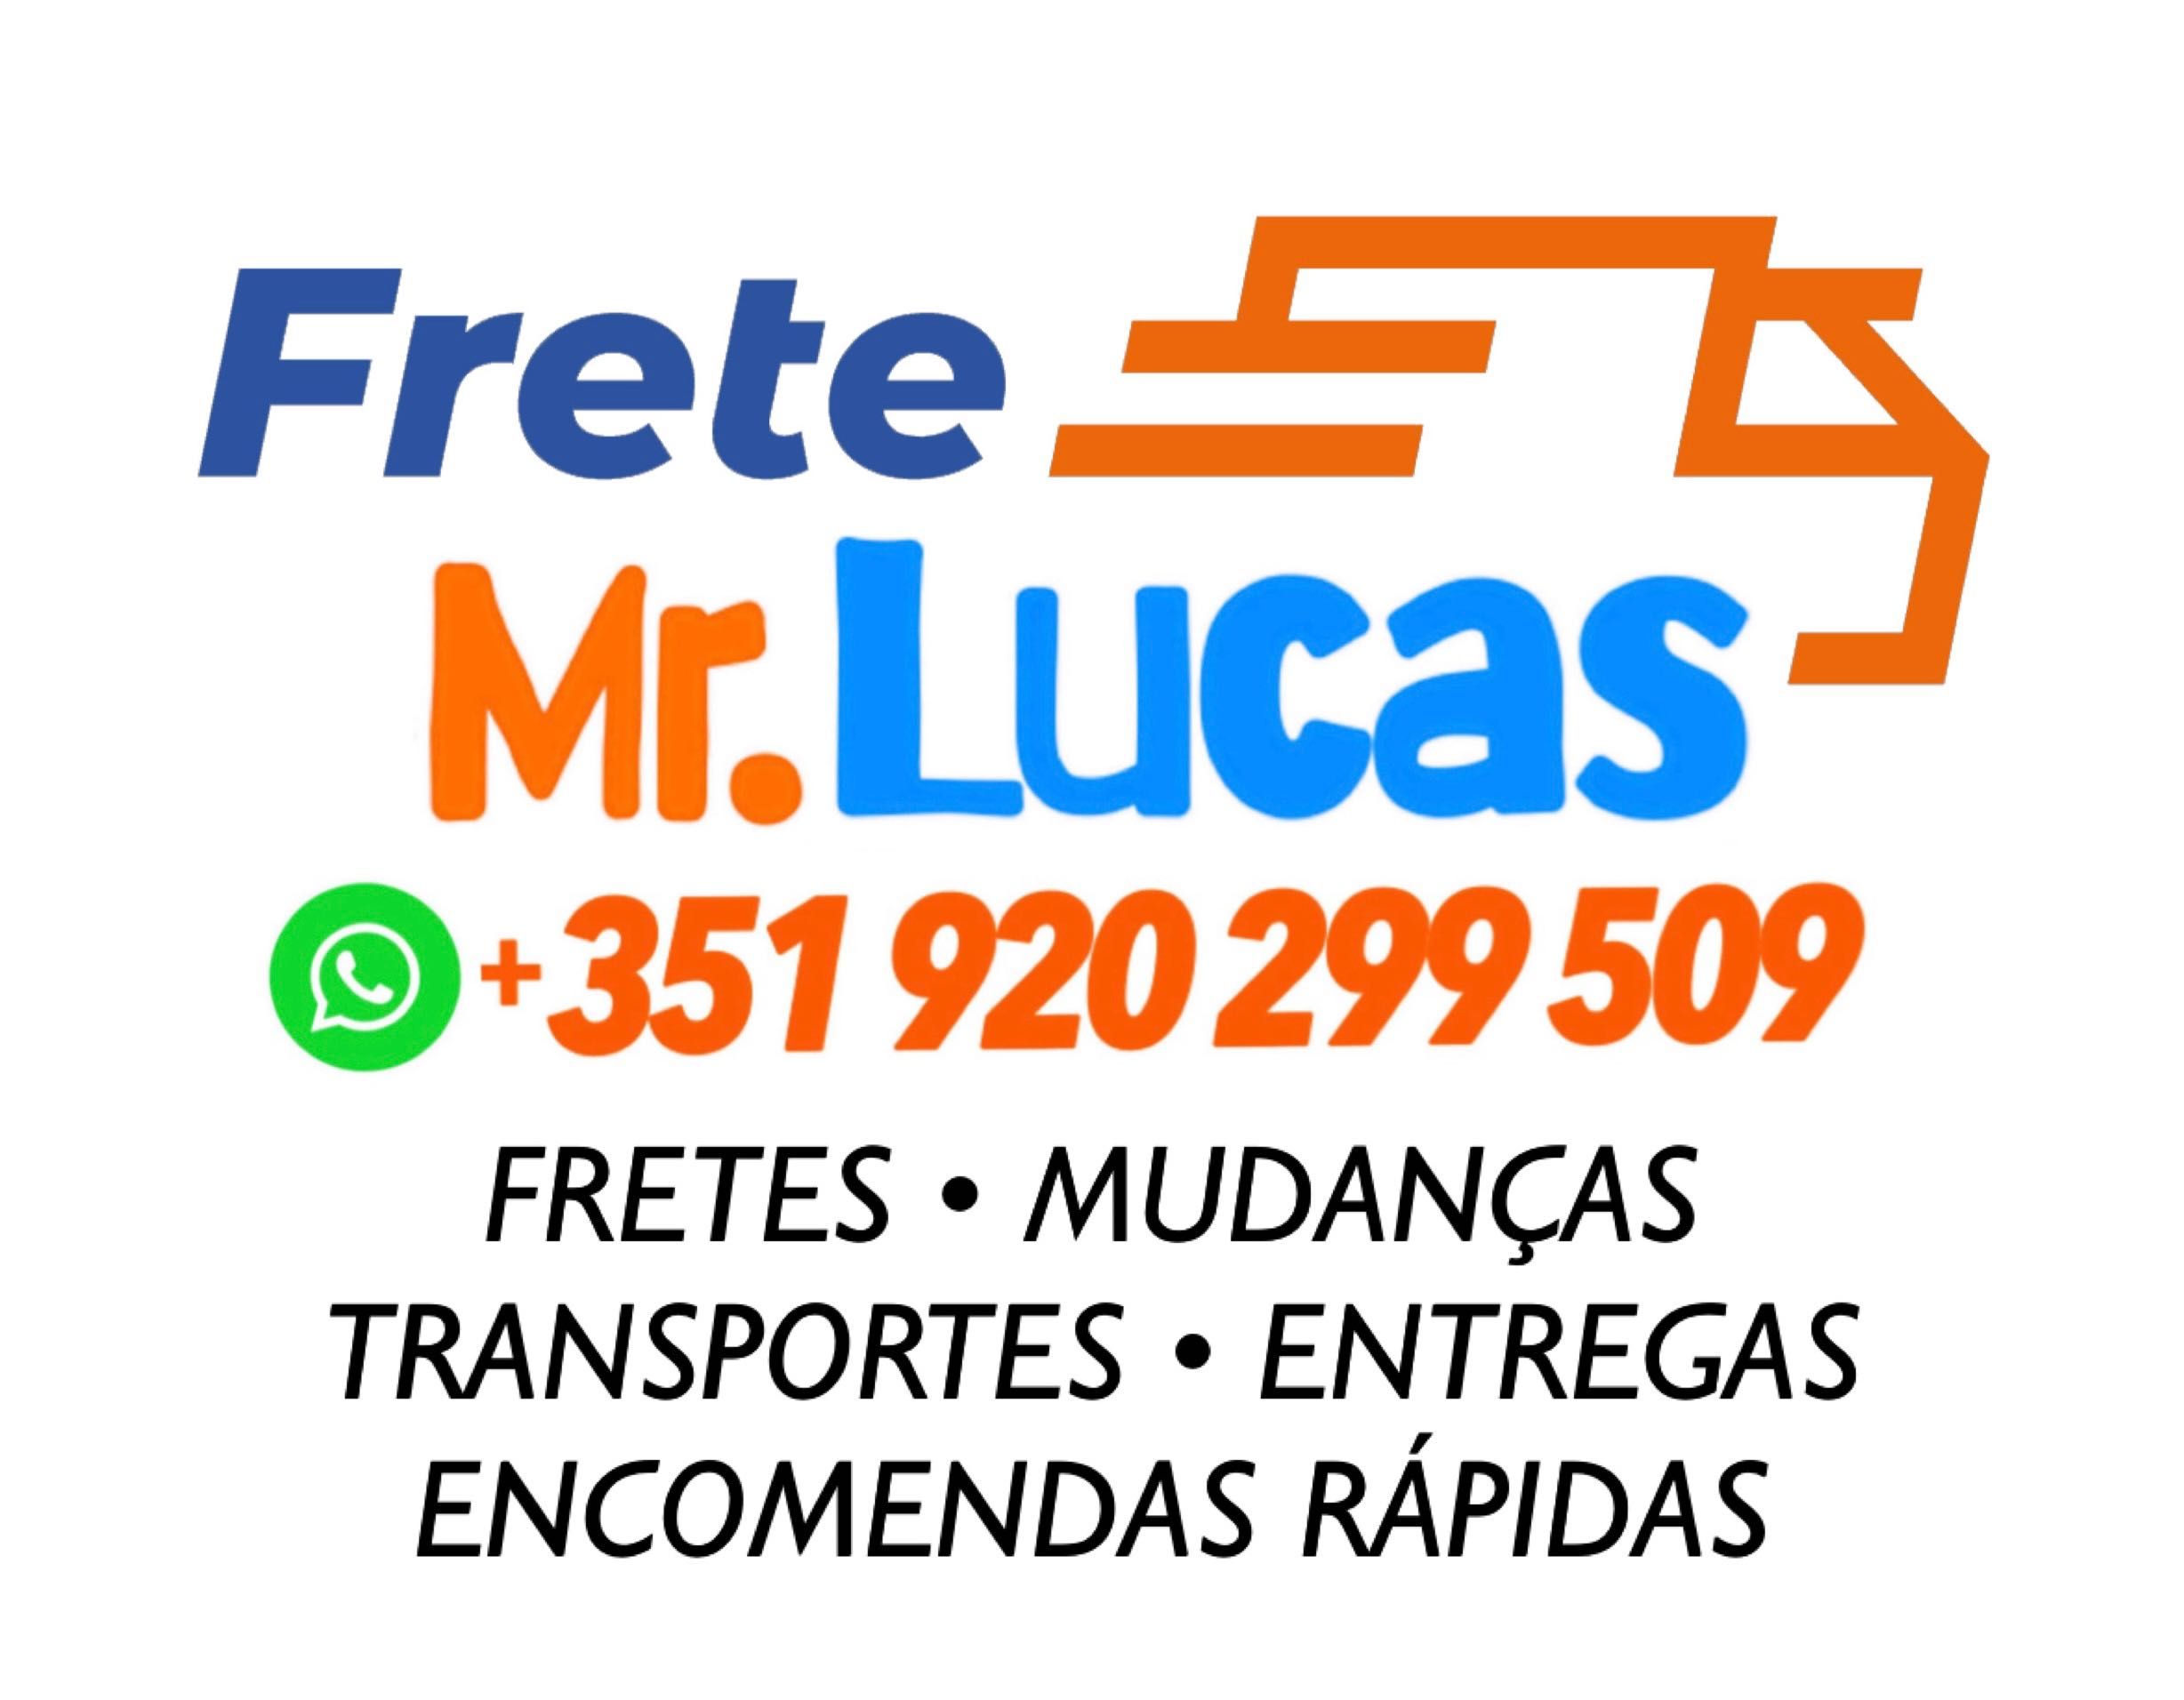 Fretes Mister Lucas